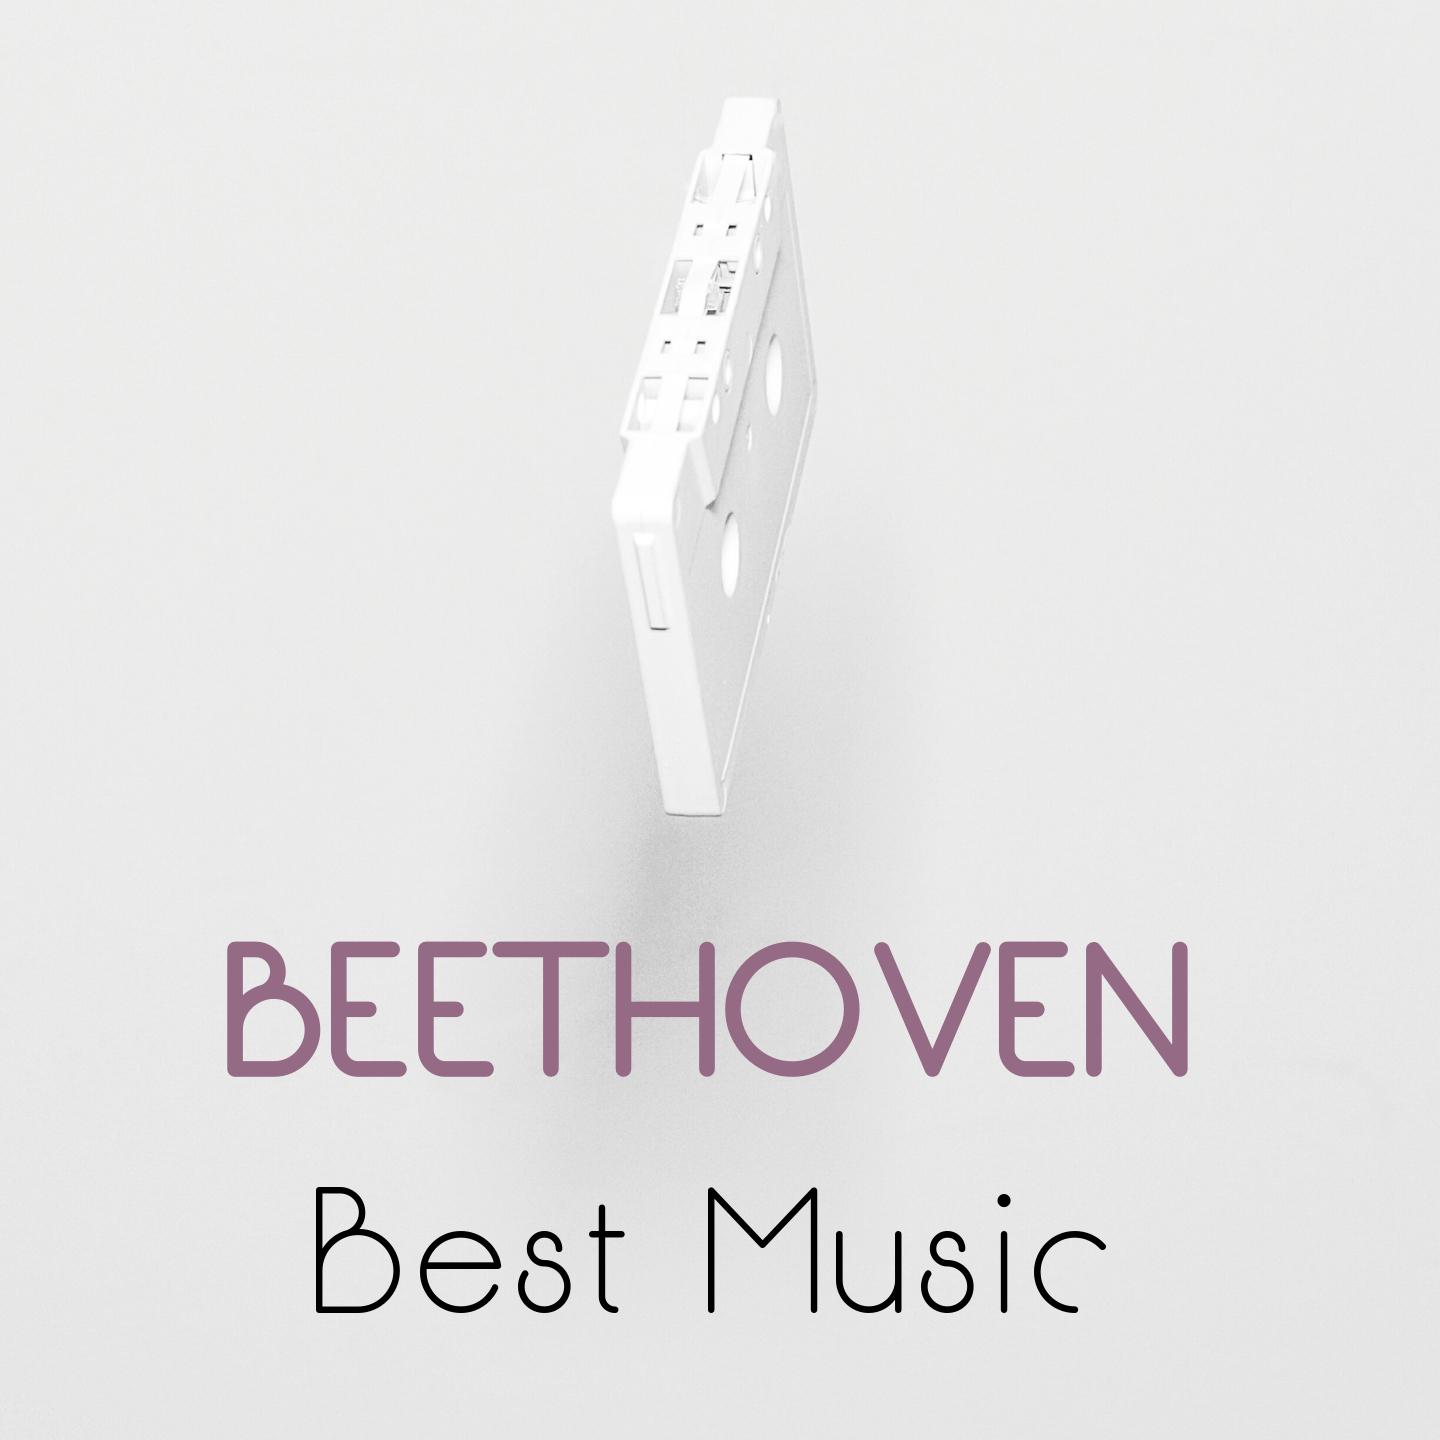 Beethoven Best Music专辑